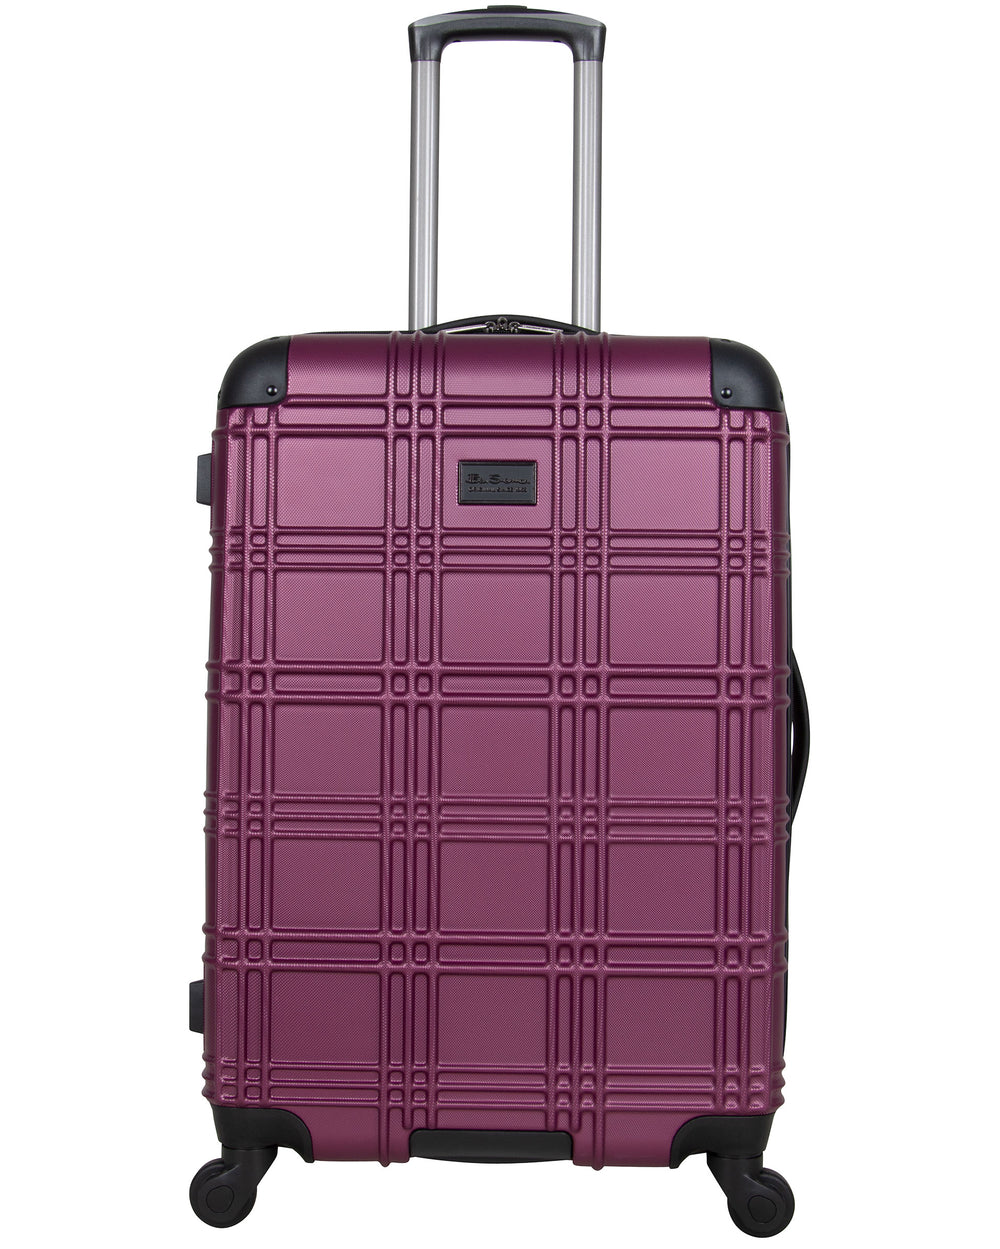 Nottingham 3-Piece Embossed Hardside Luggage Set - Raspberry